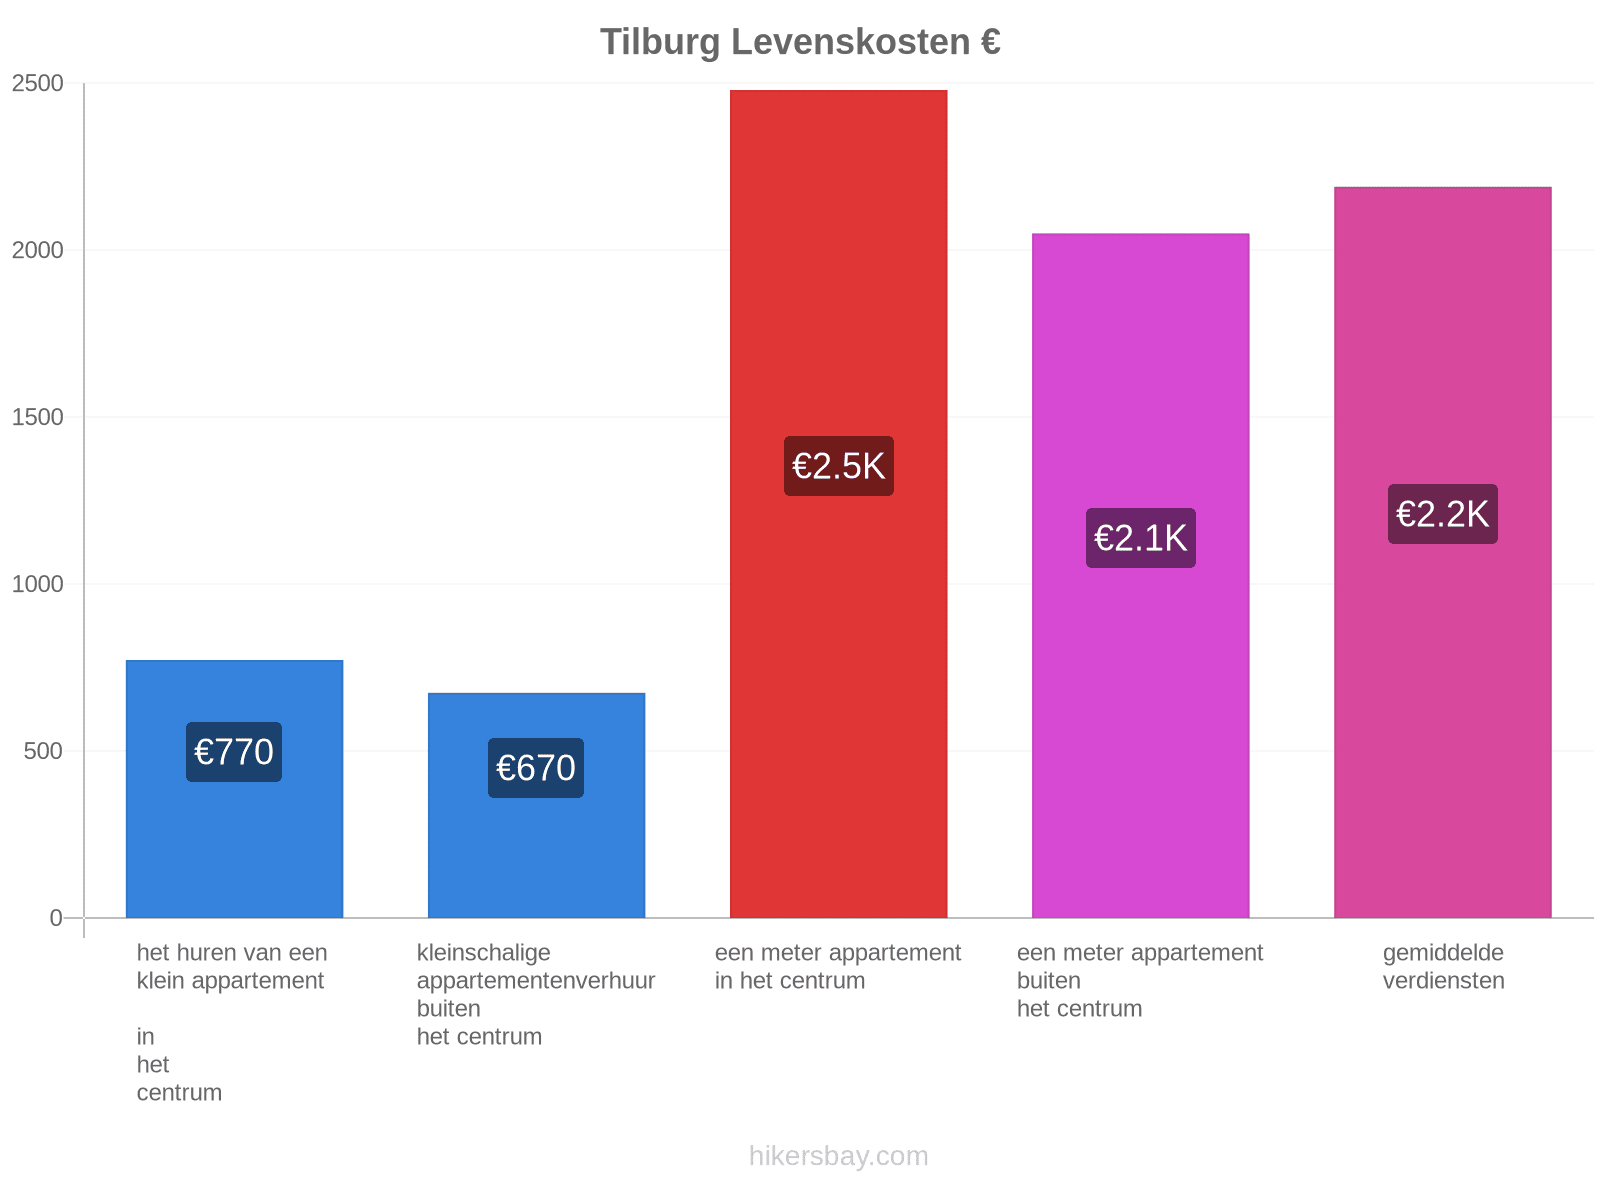 Tilburg levenskosten hikersbay.com